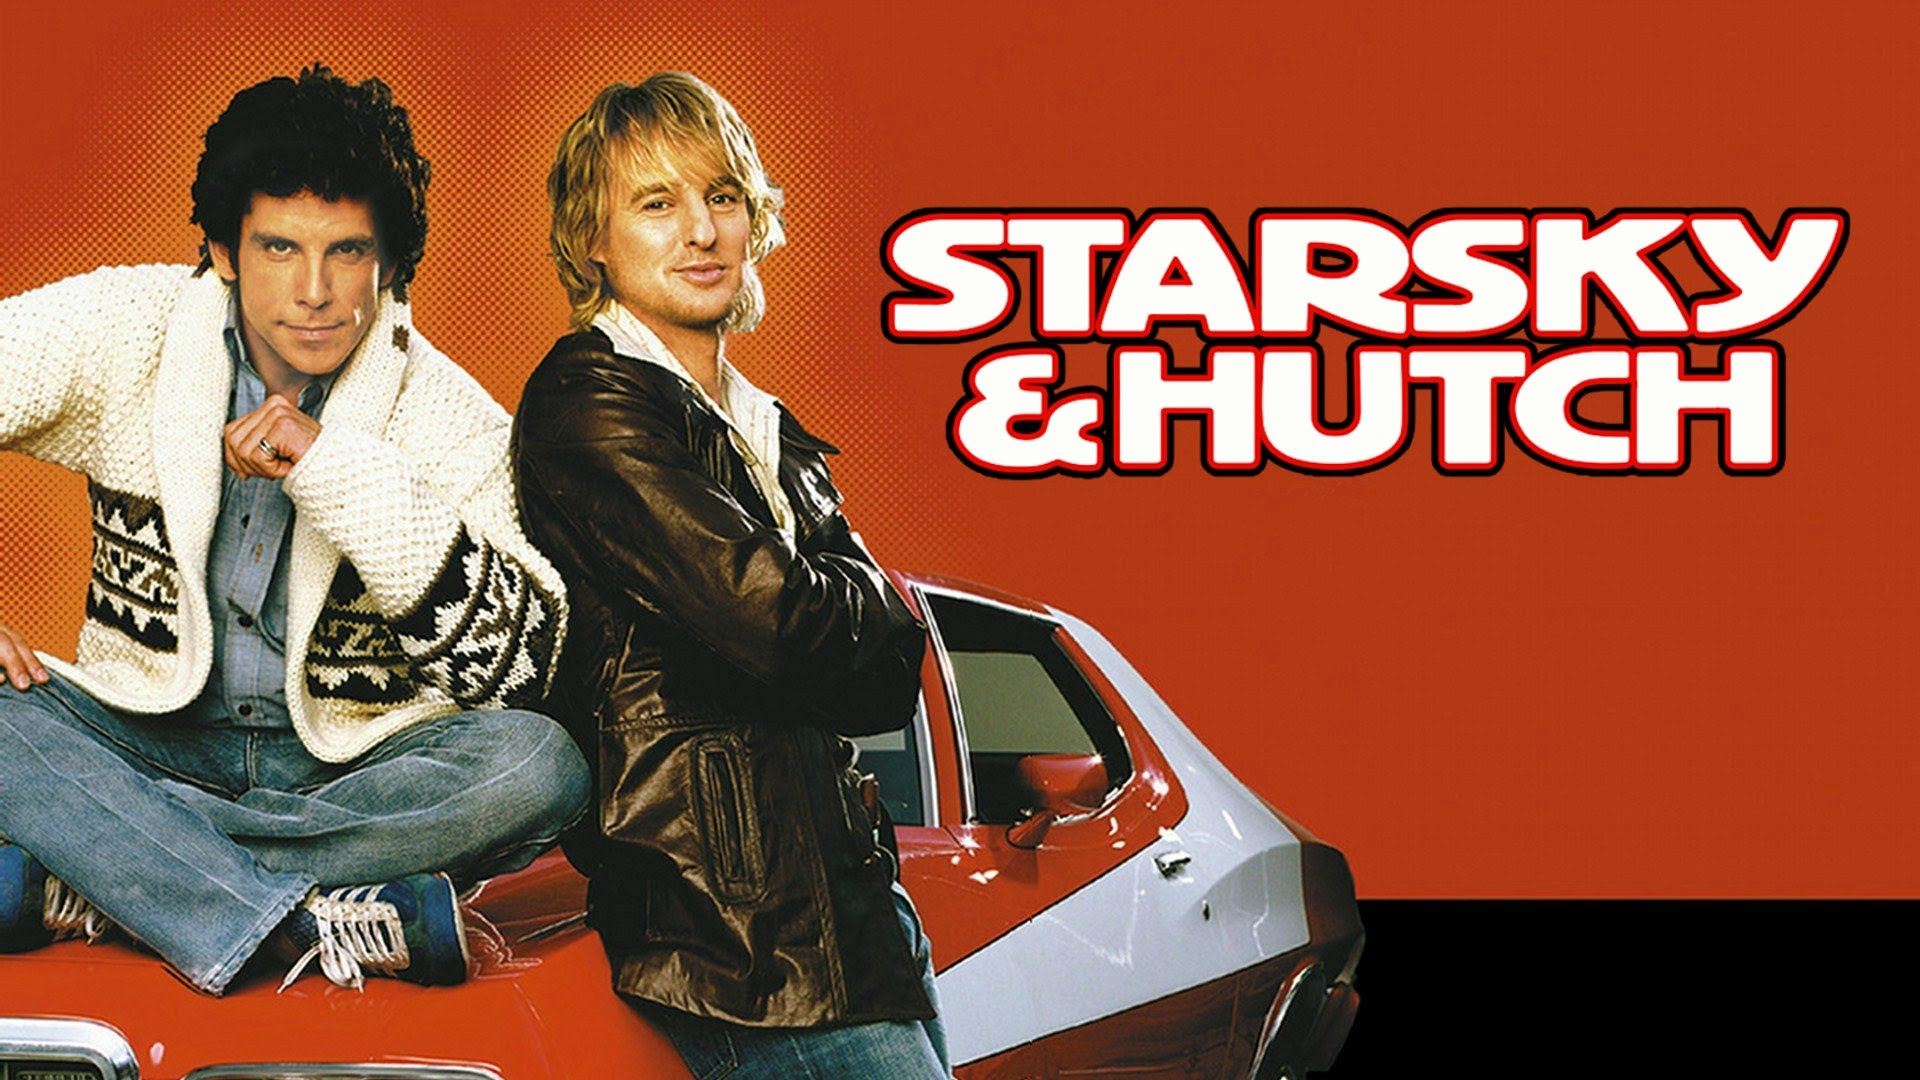 Starsky And Hutch wallpapers, Movie, HQ Starsky And Hutch pi